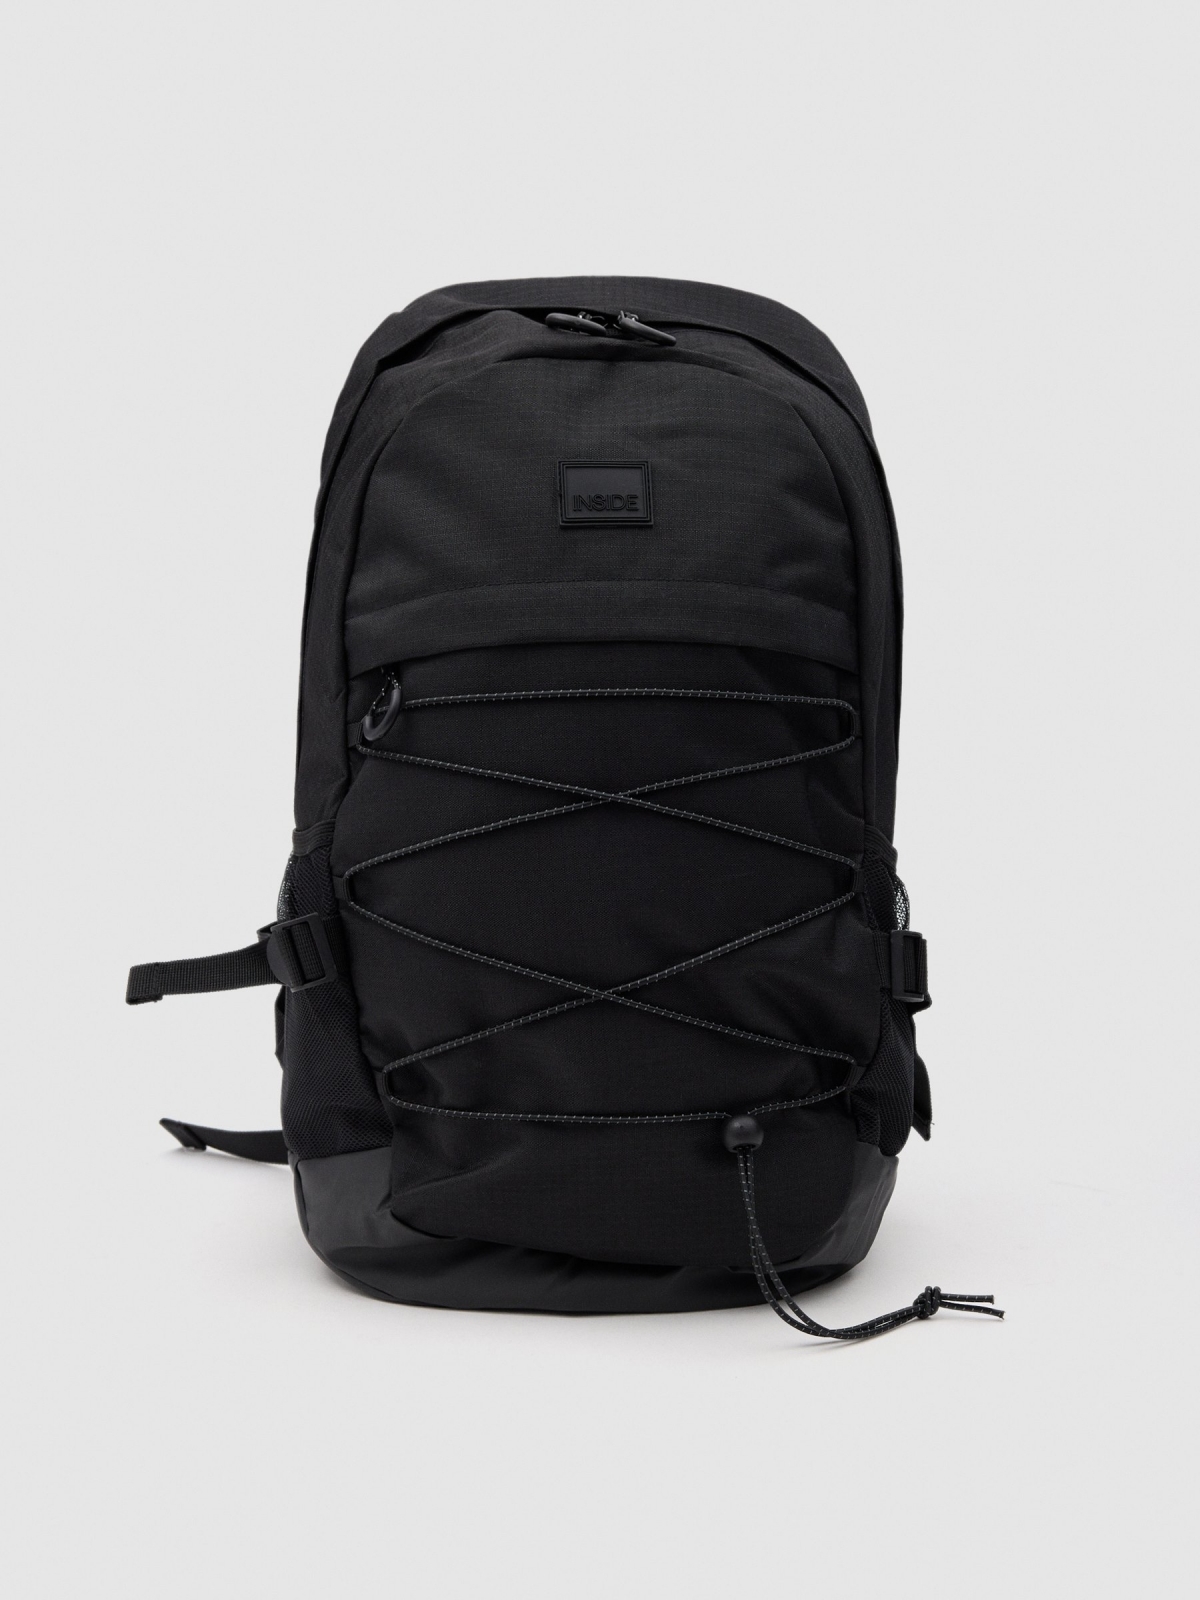 Polyester sports backpack black